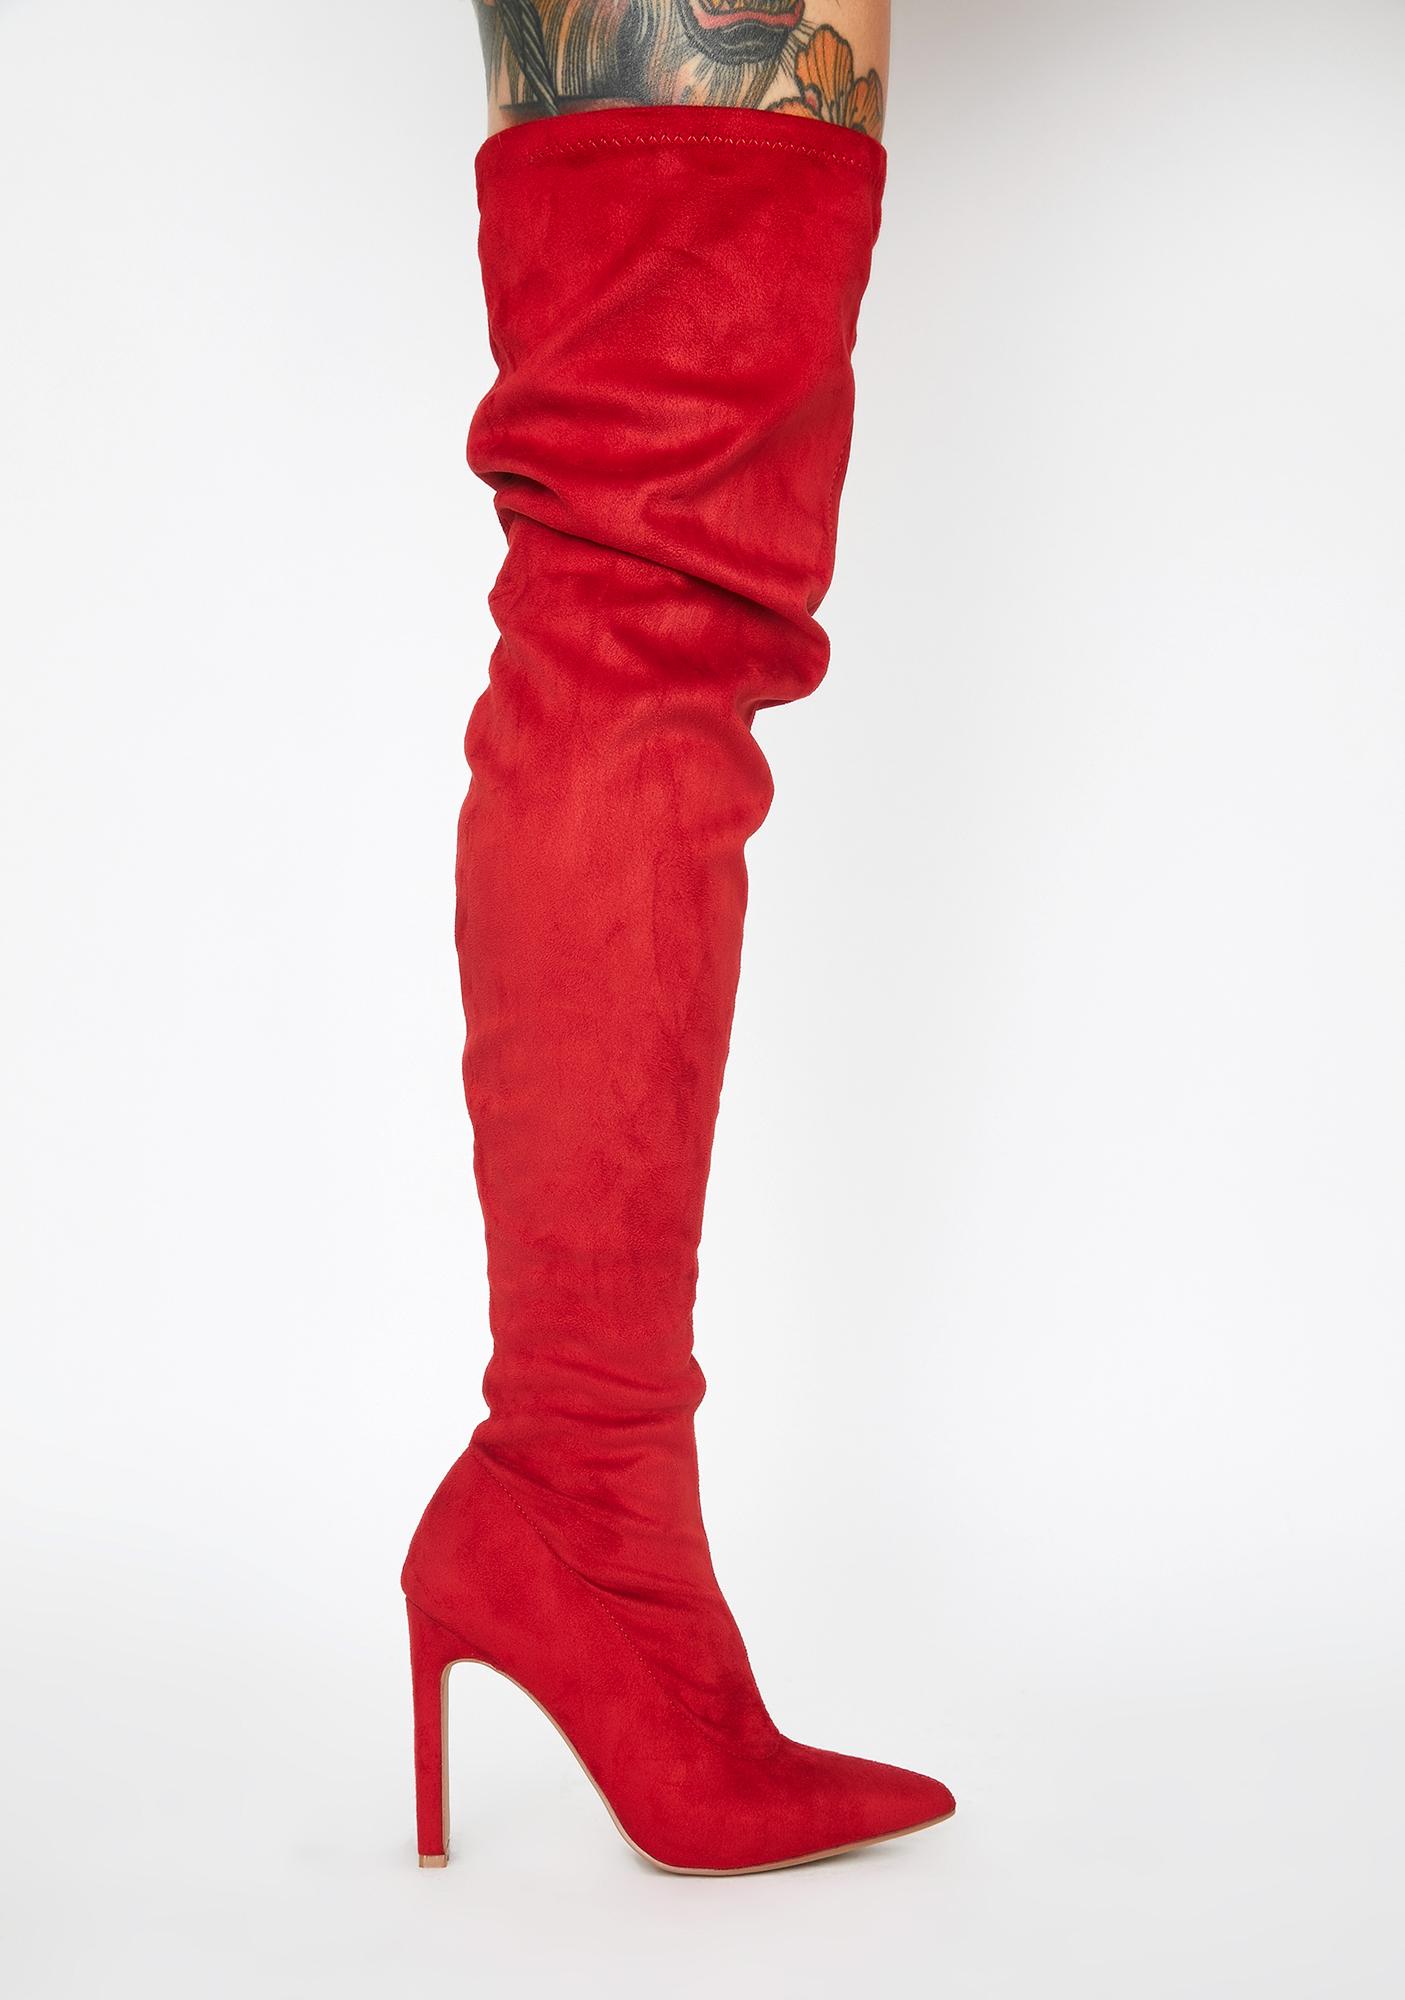 Hot Thigh High Heeled Boots | Dolls Kill